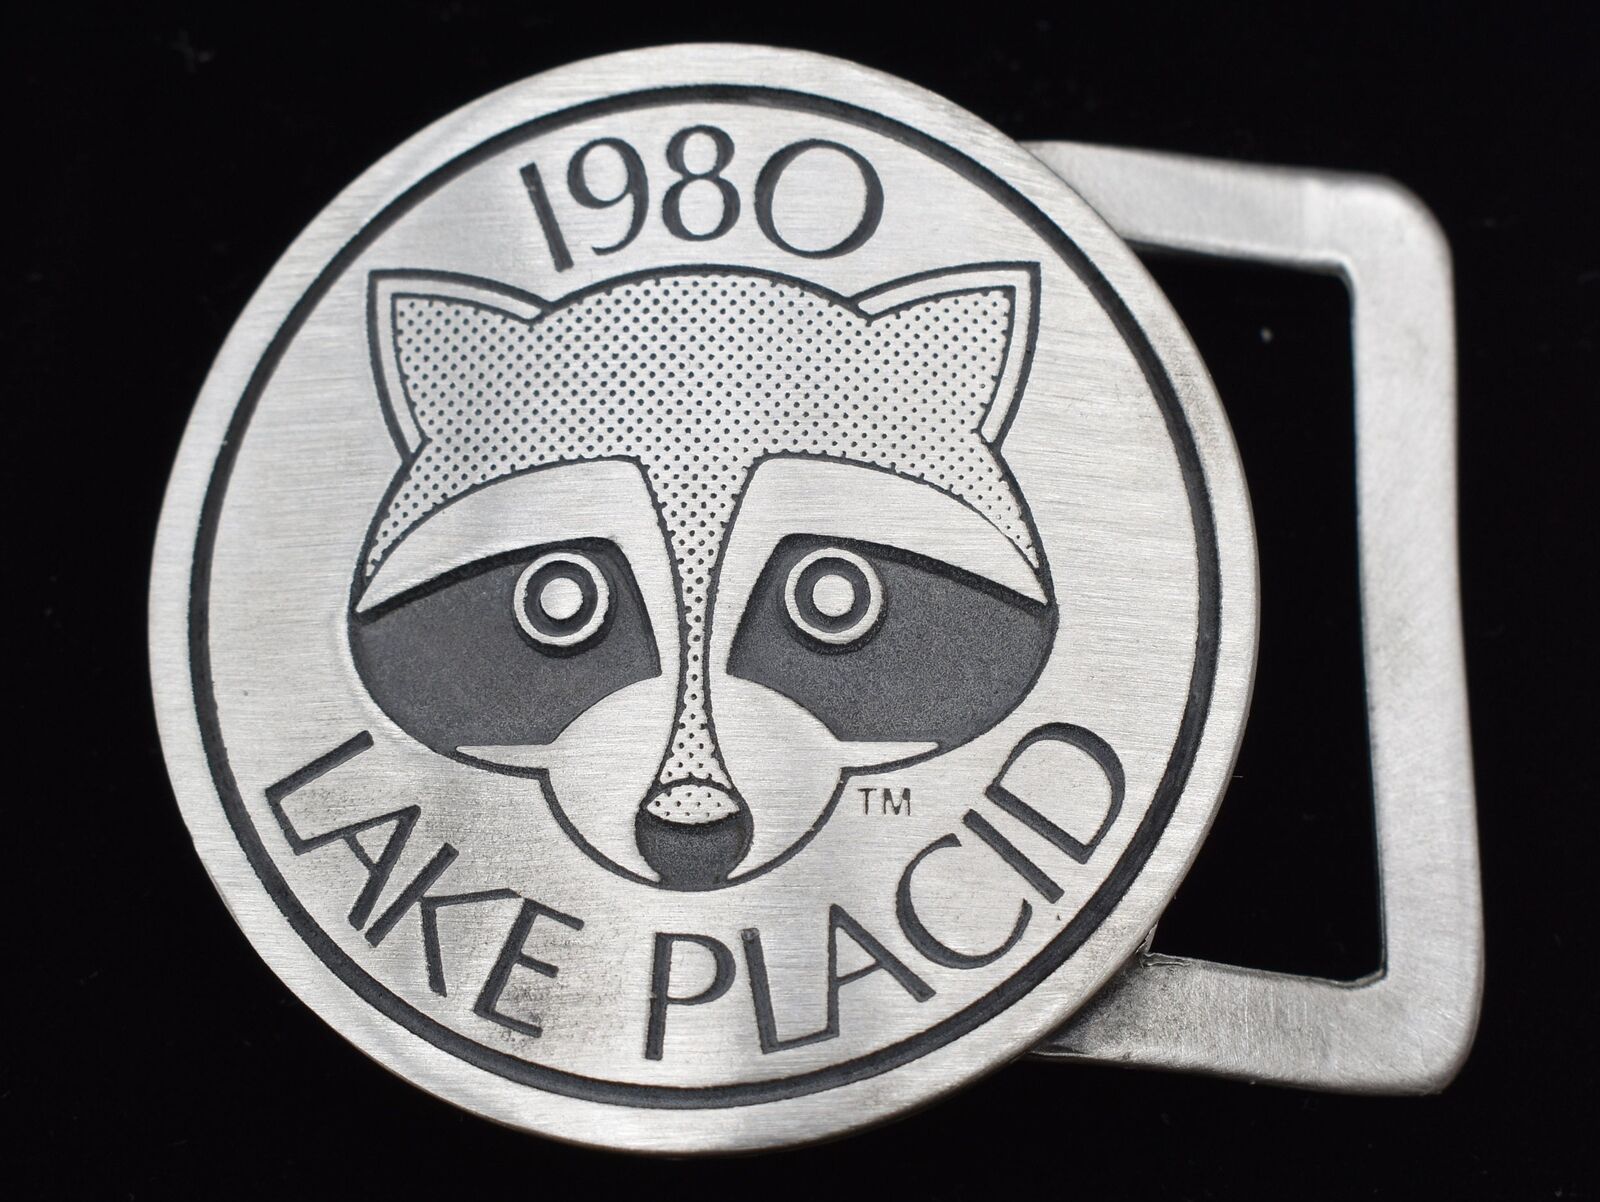 1980 Lake Placid Winter Games Olympics USA Vintage Pewter Vintage Belt Buckle